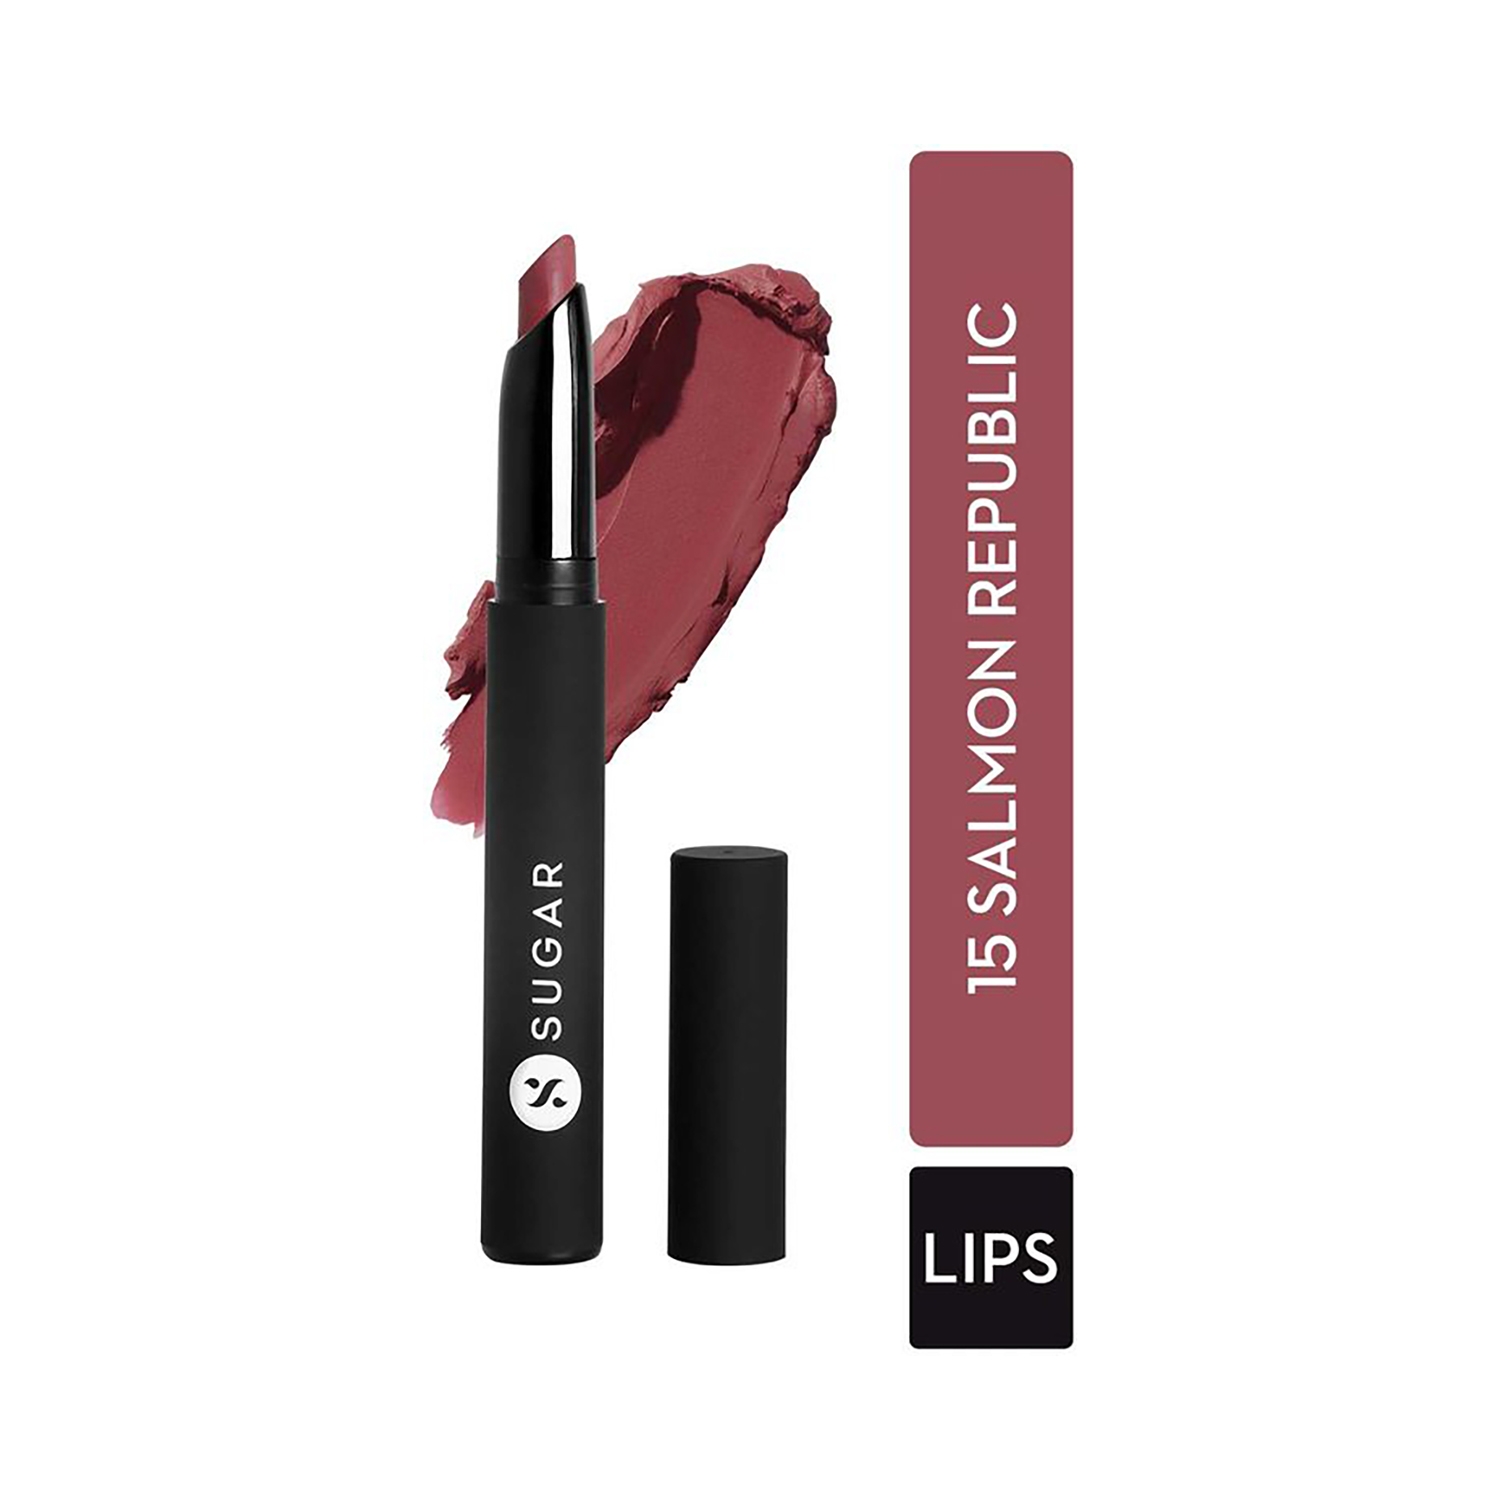 SUGAR Cosmetics | SUGAR Cosmetics Matte Attack Transferproof Lipstick - 15 Salmon Republic (Deep Salmon Pink) (2g)